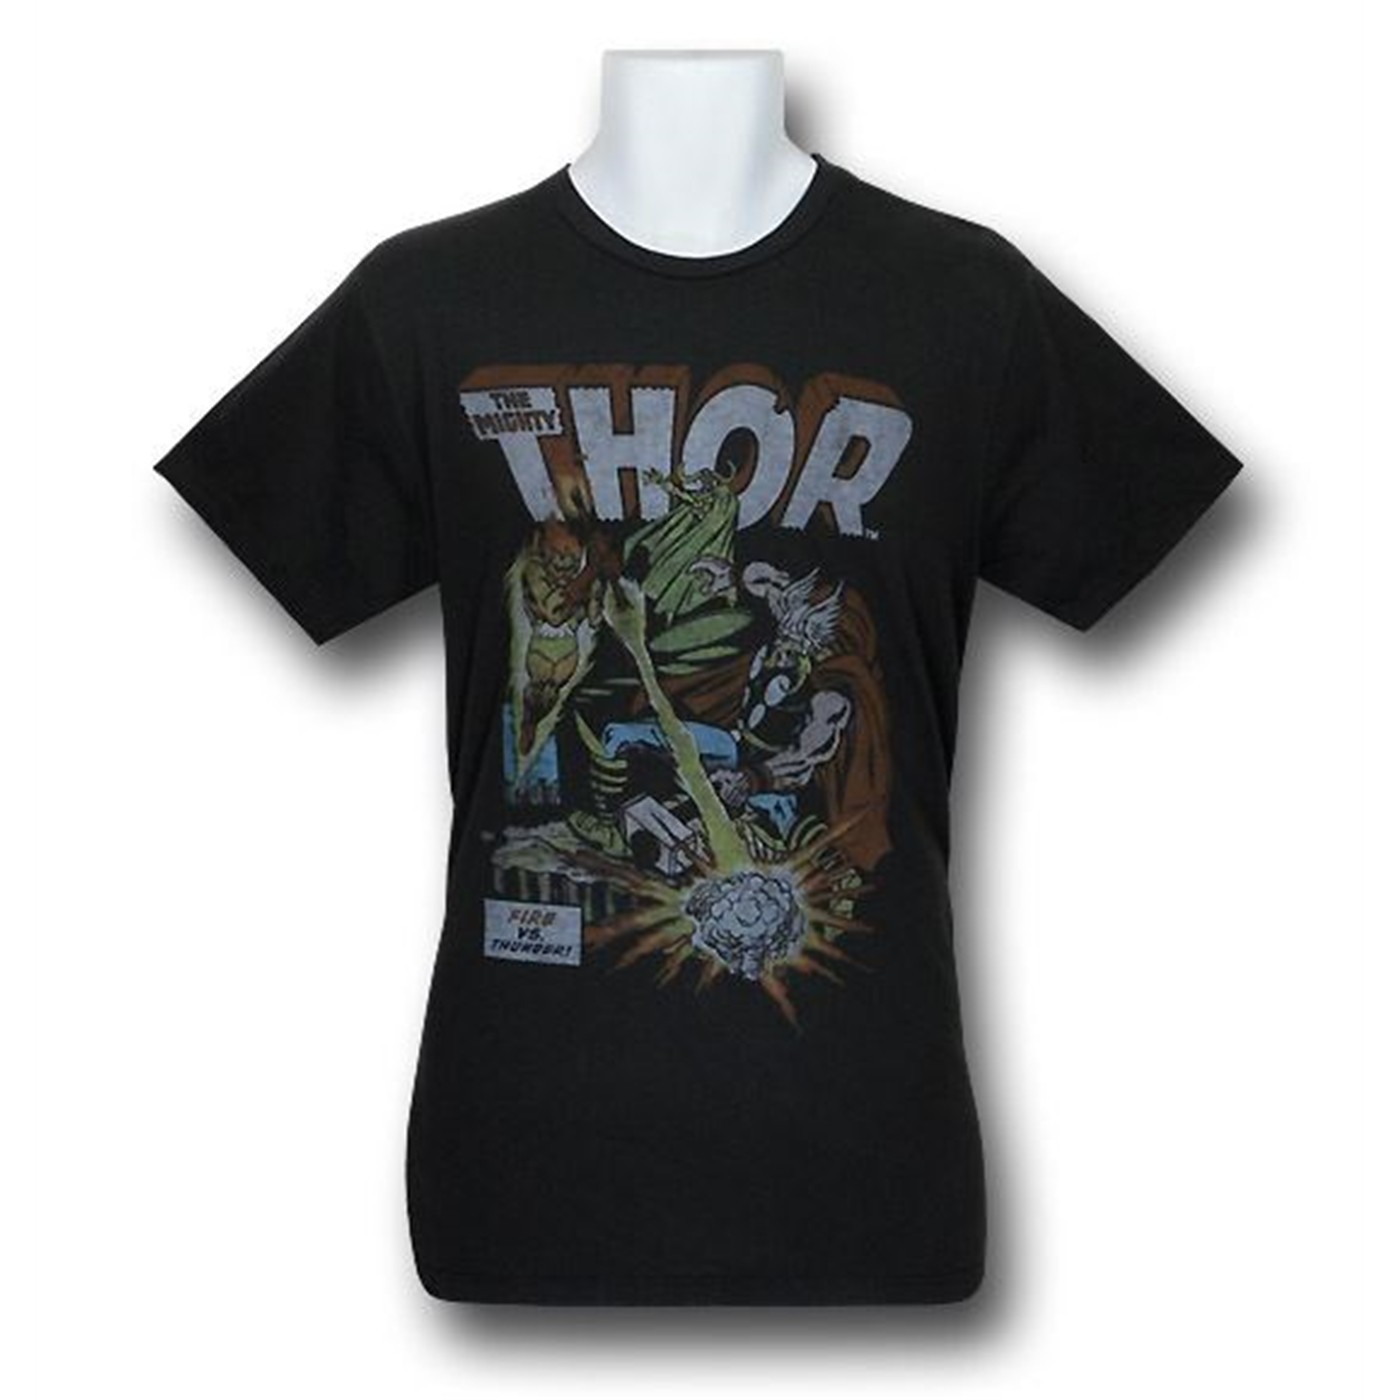 Thor Fire Vs Thunder Junk Food T-Shirt